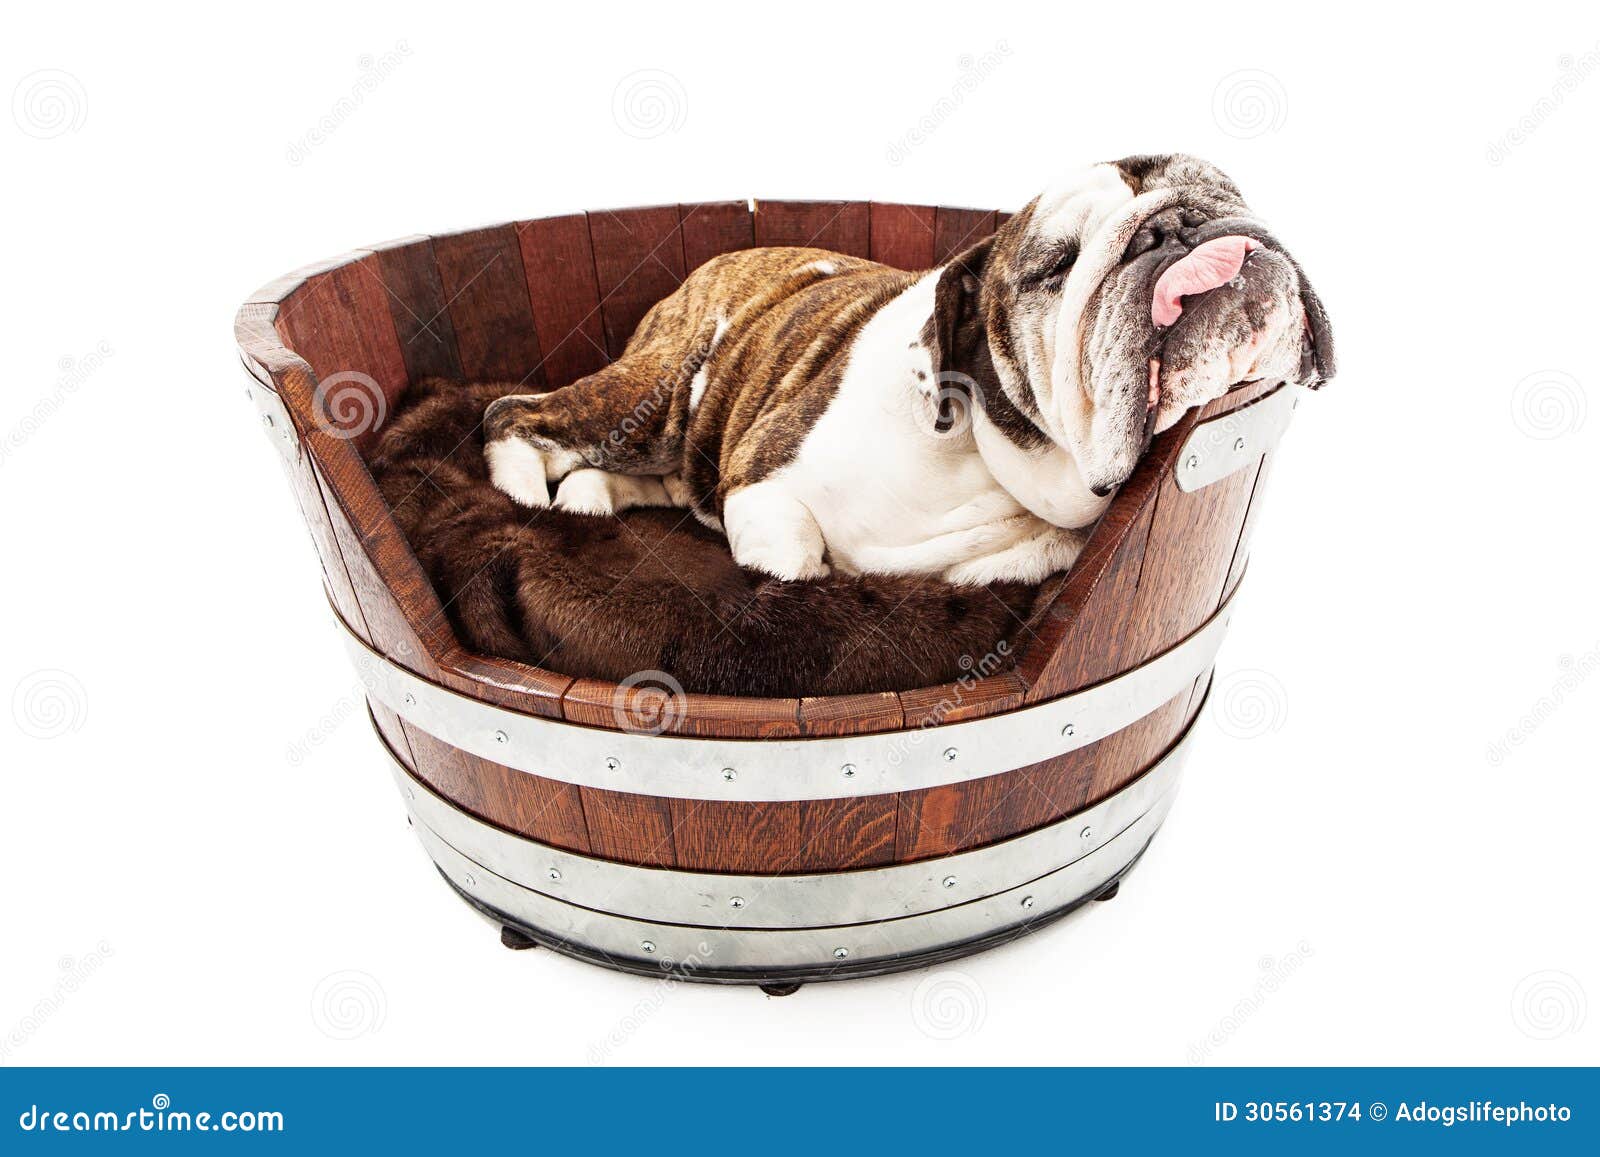 English Bulldog Sleeping With Tongue Out Stock Photo 